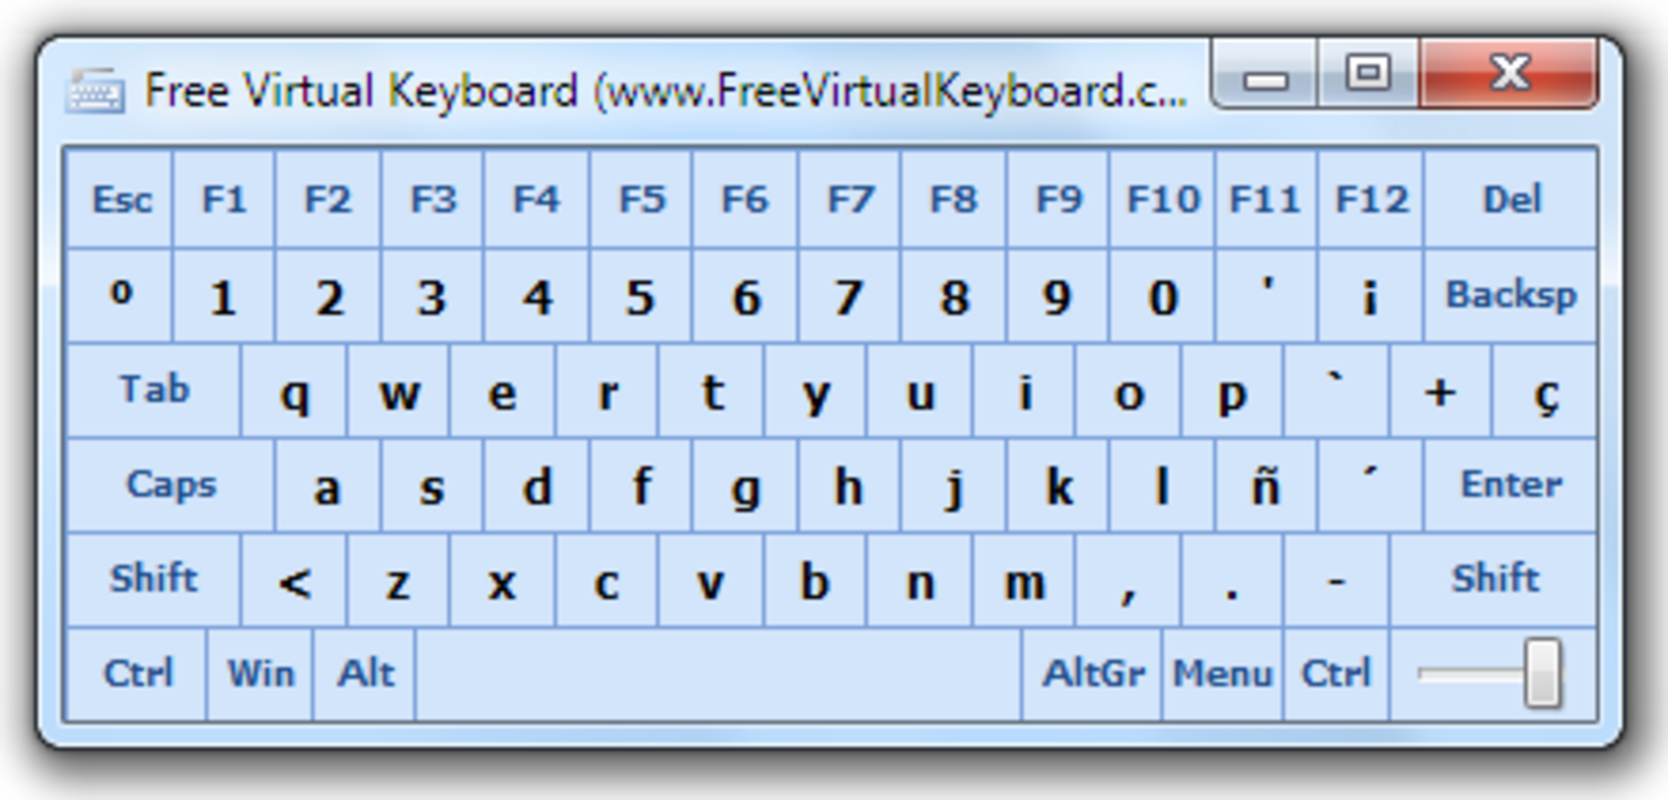 Free Virtual Keyboard 5.0 feature